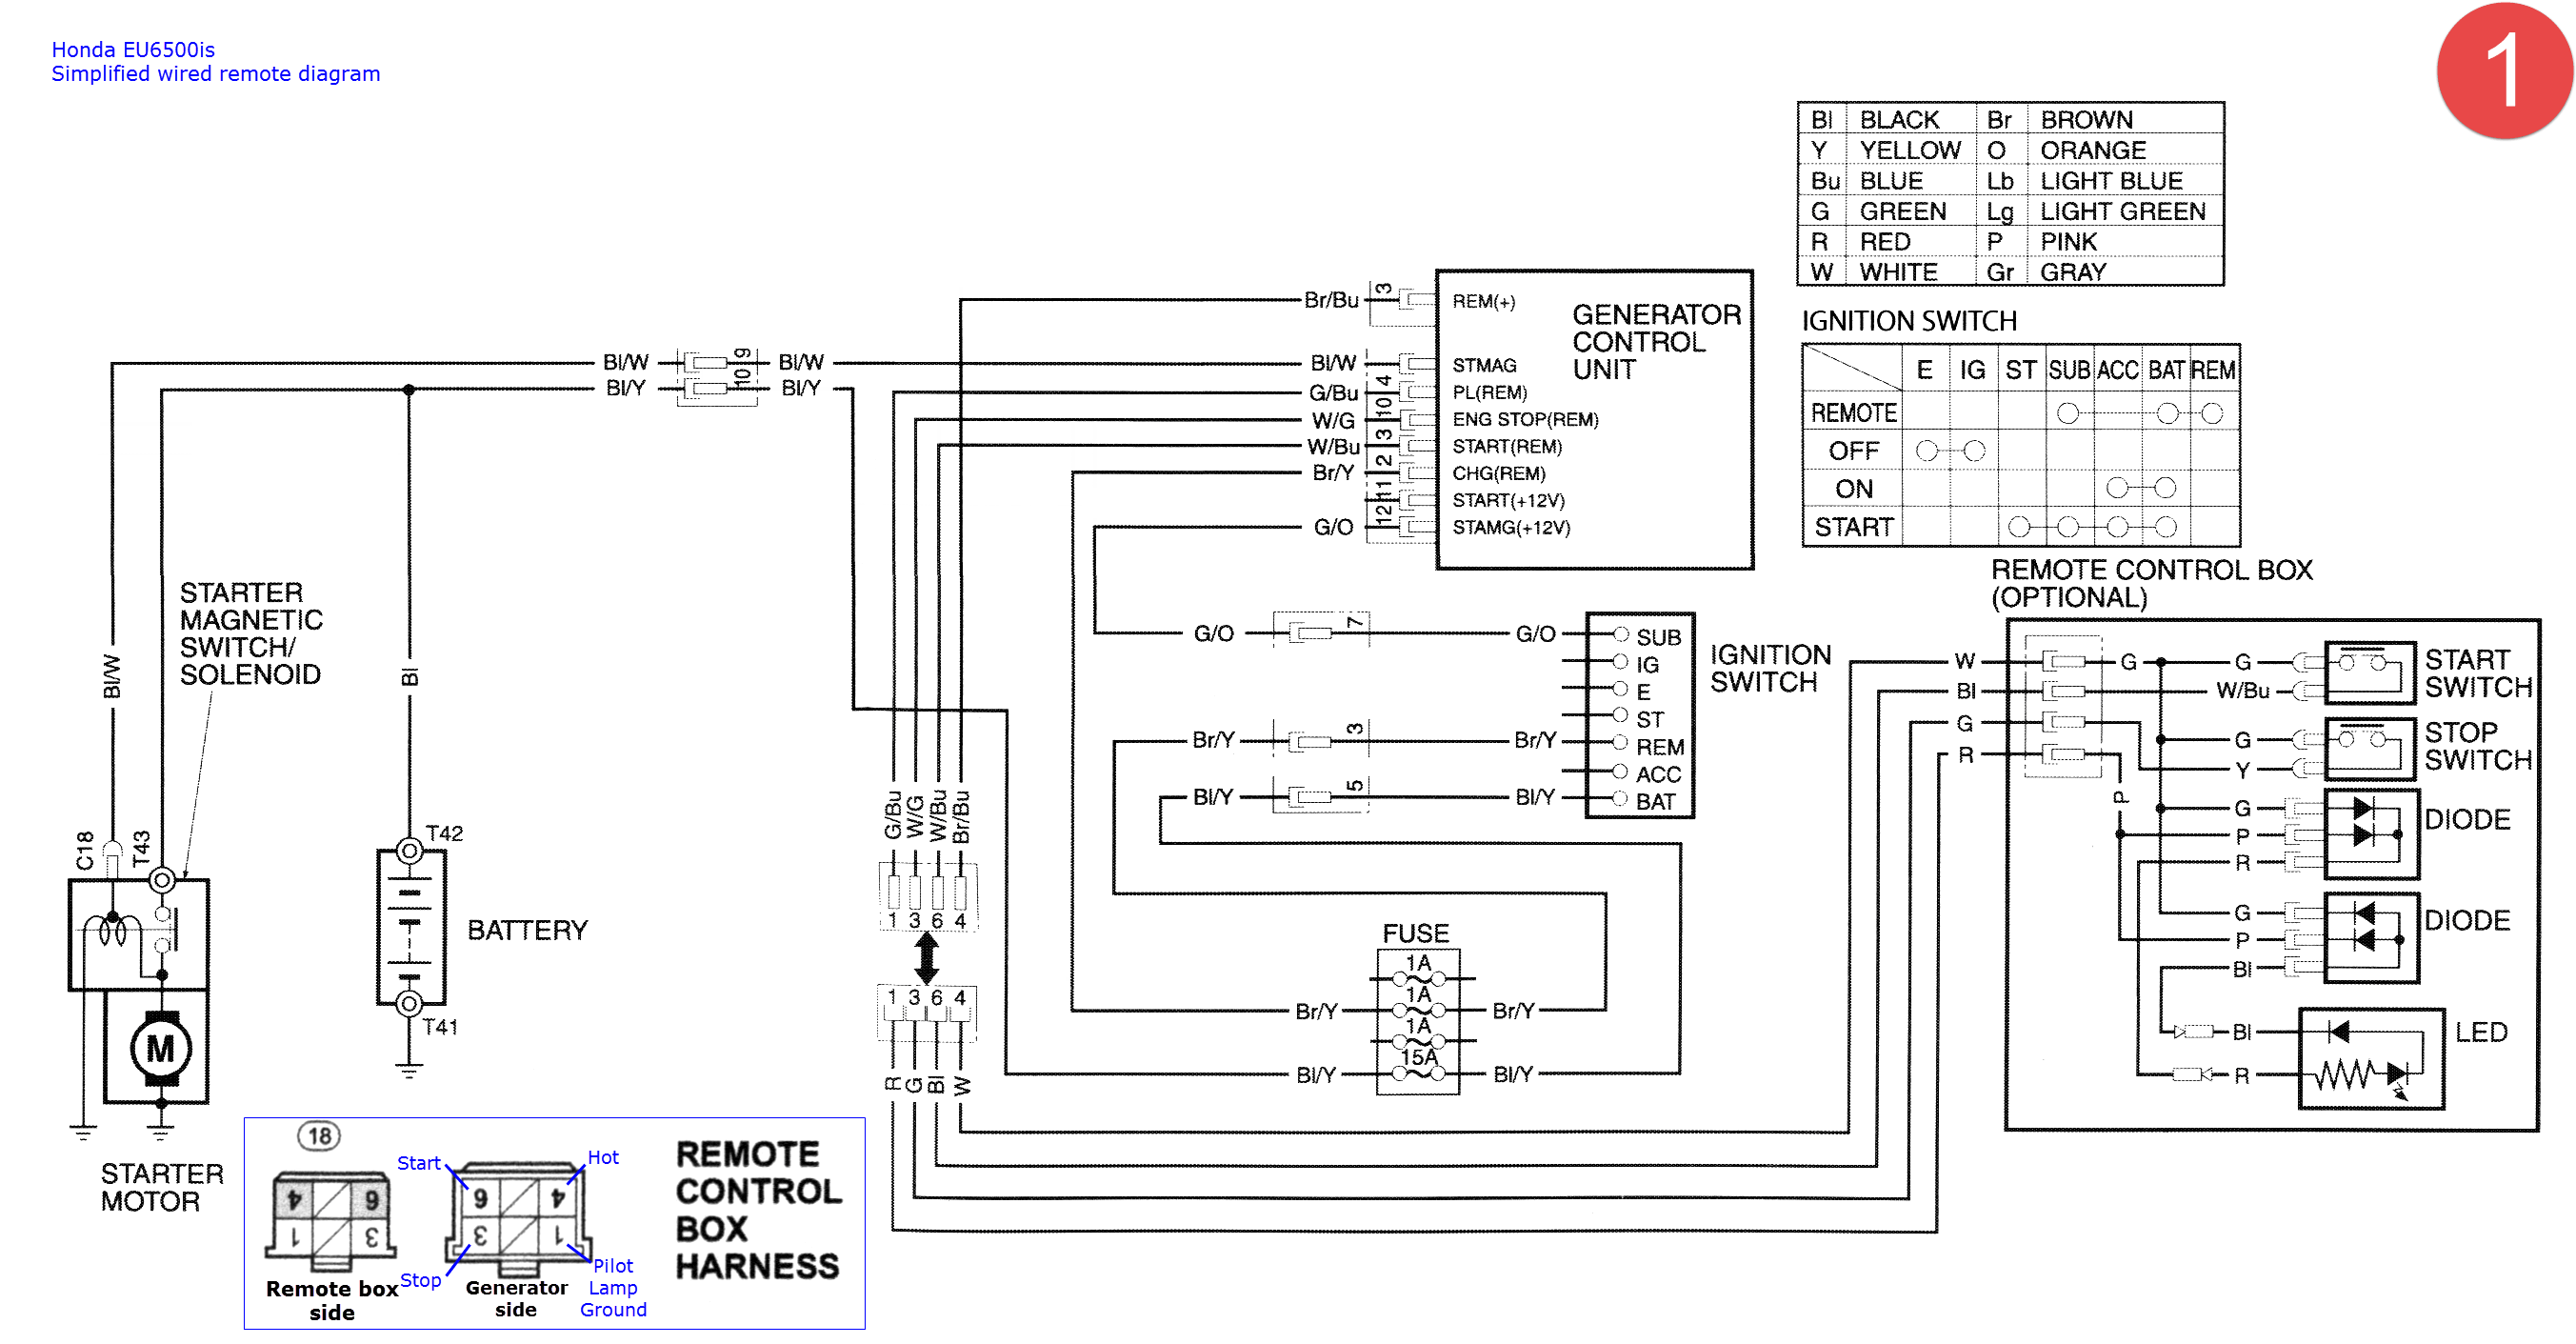 Honda EU6500is remote control wiring diagram (simplified)